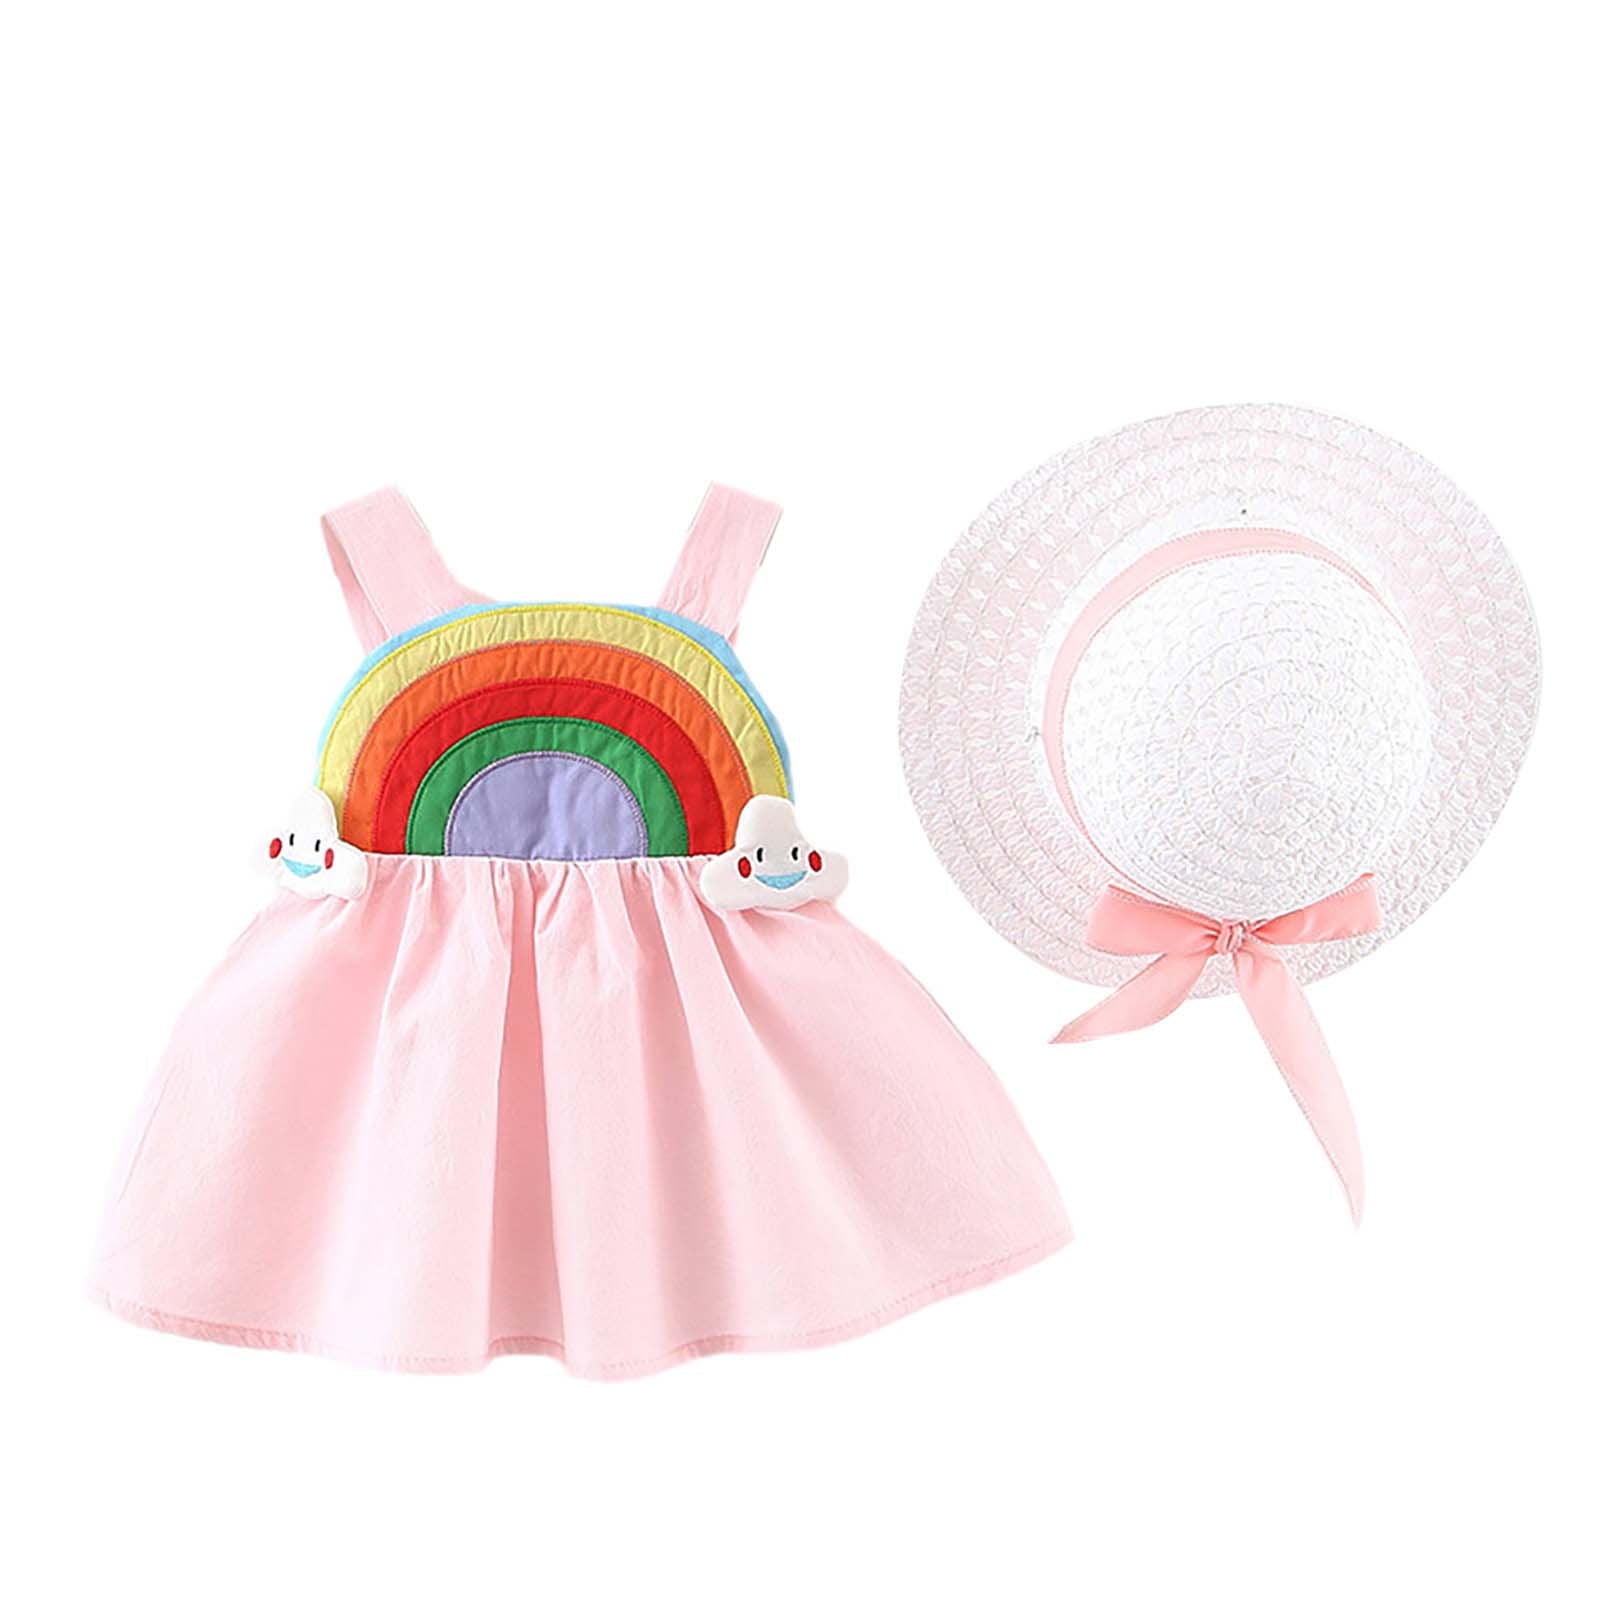 Baby Girls Summer Dresses Hat Sleeveless Rainbow Dress Bowknot Princess Skirt Pleated Flared A line Swing Photogarphy Beach Infant Toddler 0 24 Month 5329f457 7921 4c49 bb09 418ef39cf817.5ca3f7eb8279d1b524986de41c909326